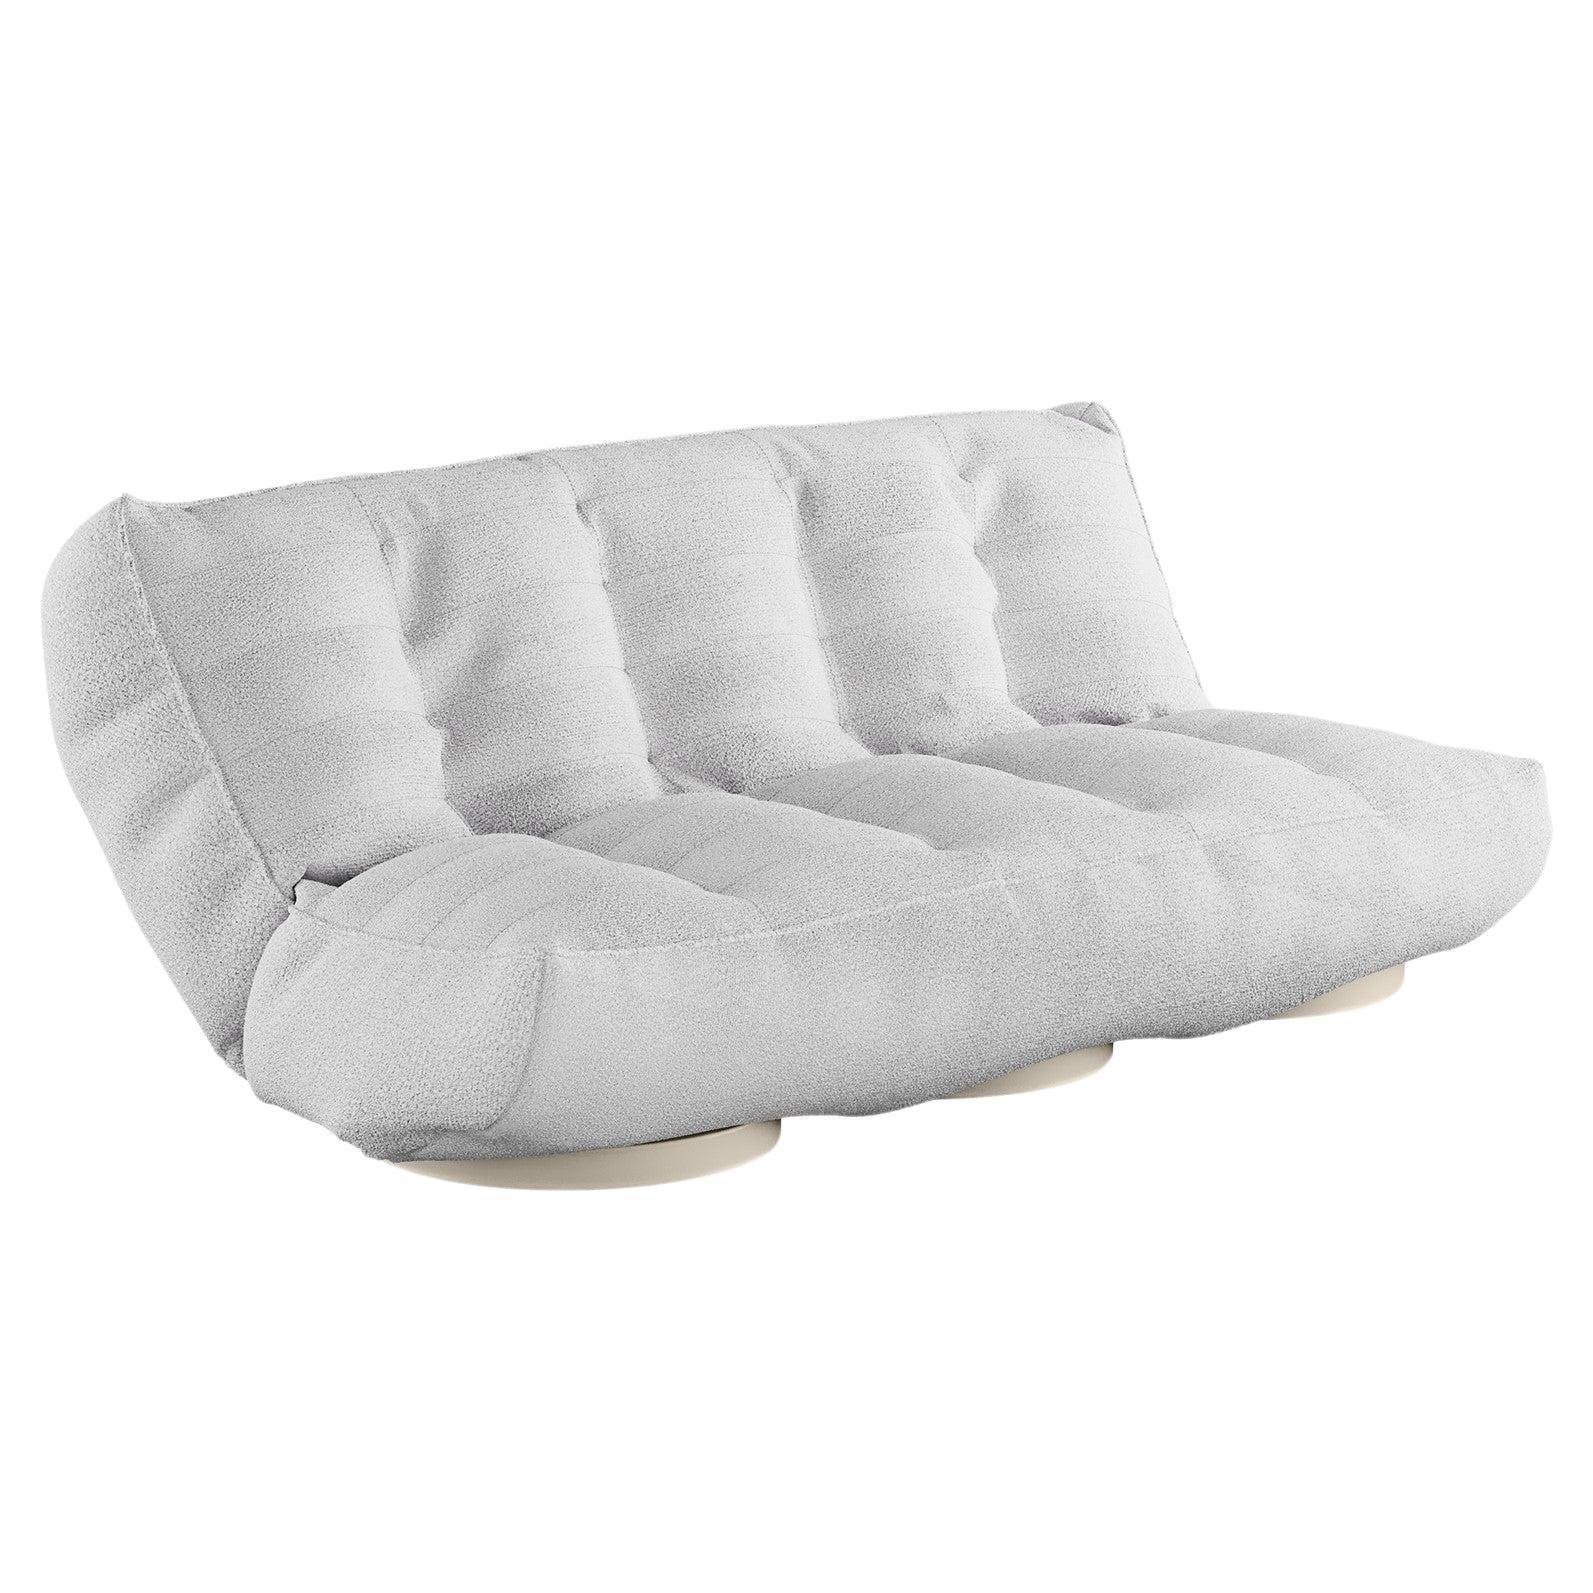 Modernes Outdoor-Sofa Klappbares weißes Daybed gepolstert in Sand Outdoor-Stoff